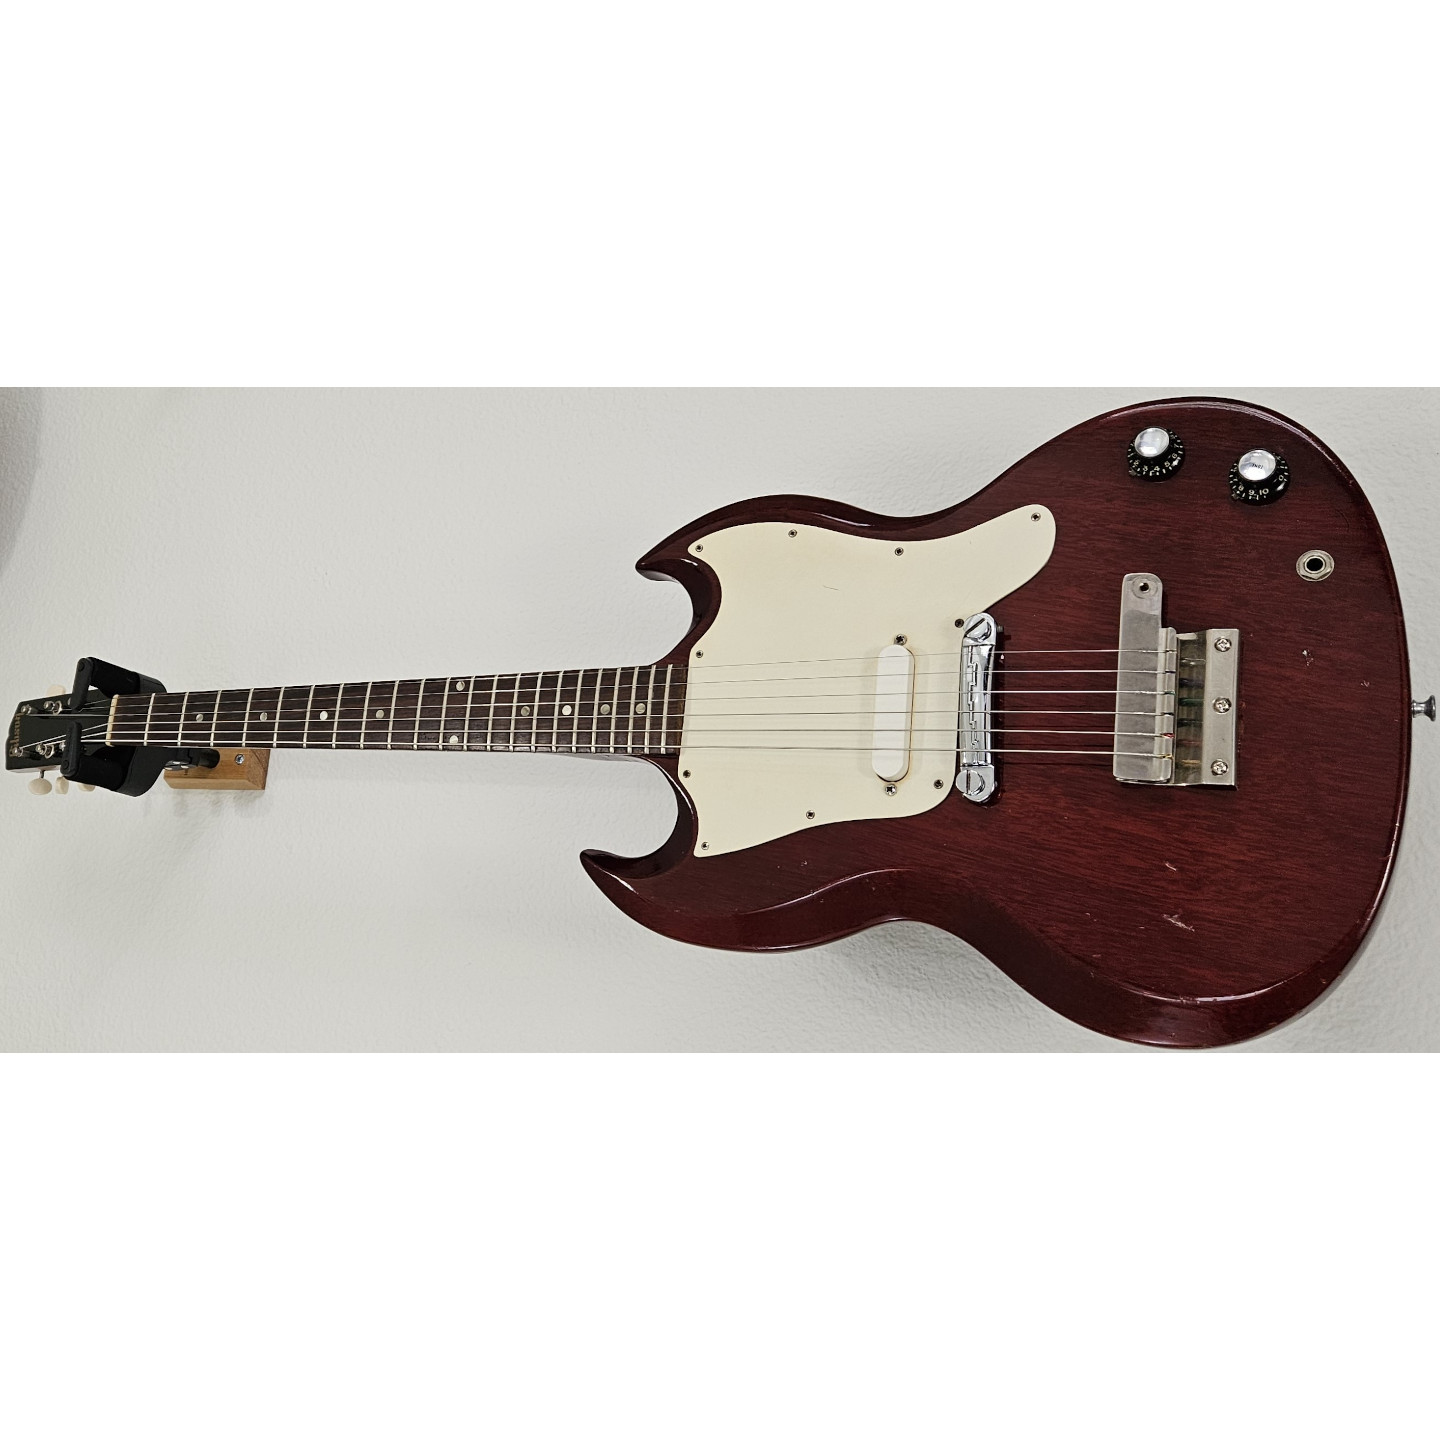 1966 Gibson Melody Maker Vibrola Cherry SG Vintage Electric Guitar